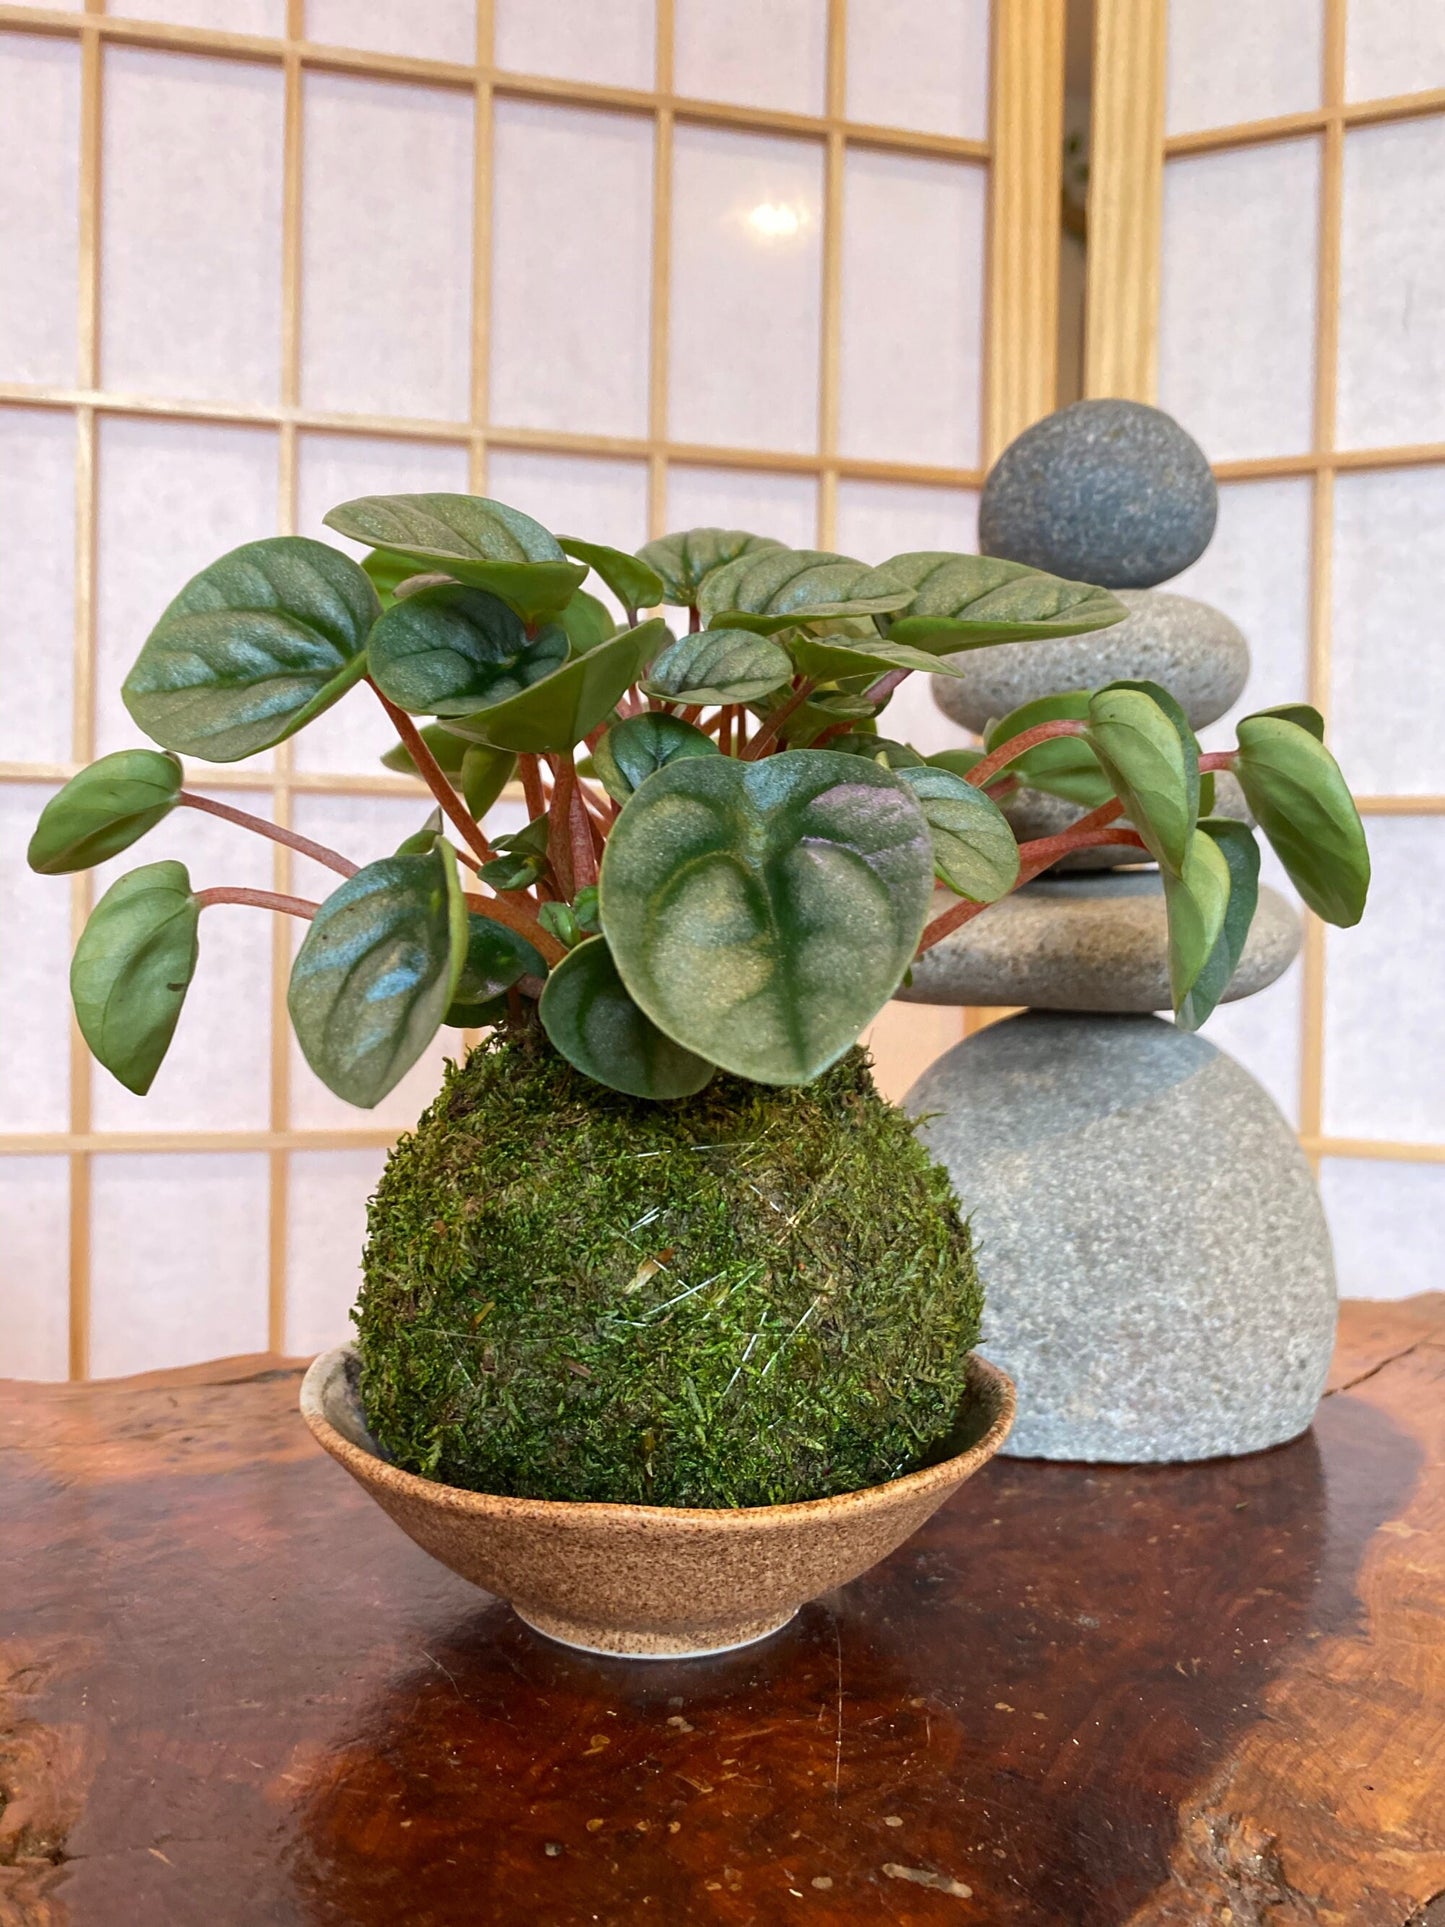 Small 4.5" dia x 1.5" ht 信楽焼Shigaraki ware 荒土Arado Japanese Ceramic bowl, Wafu, rustic style, natural soil color grazed with plant picture.